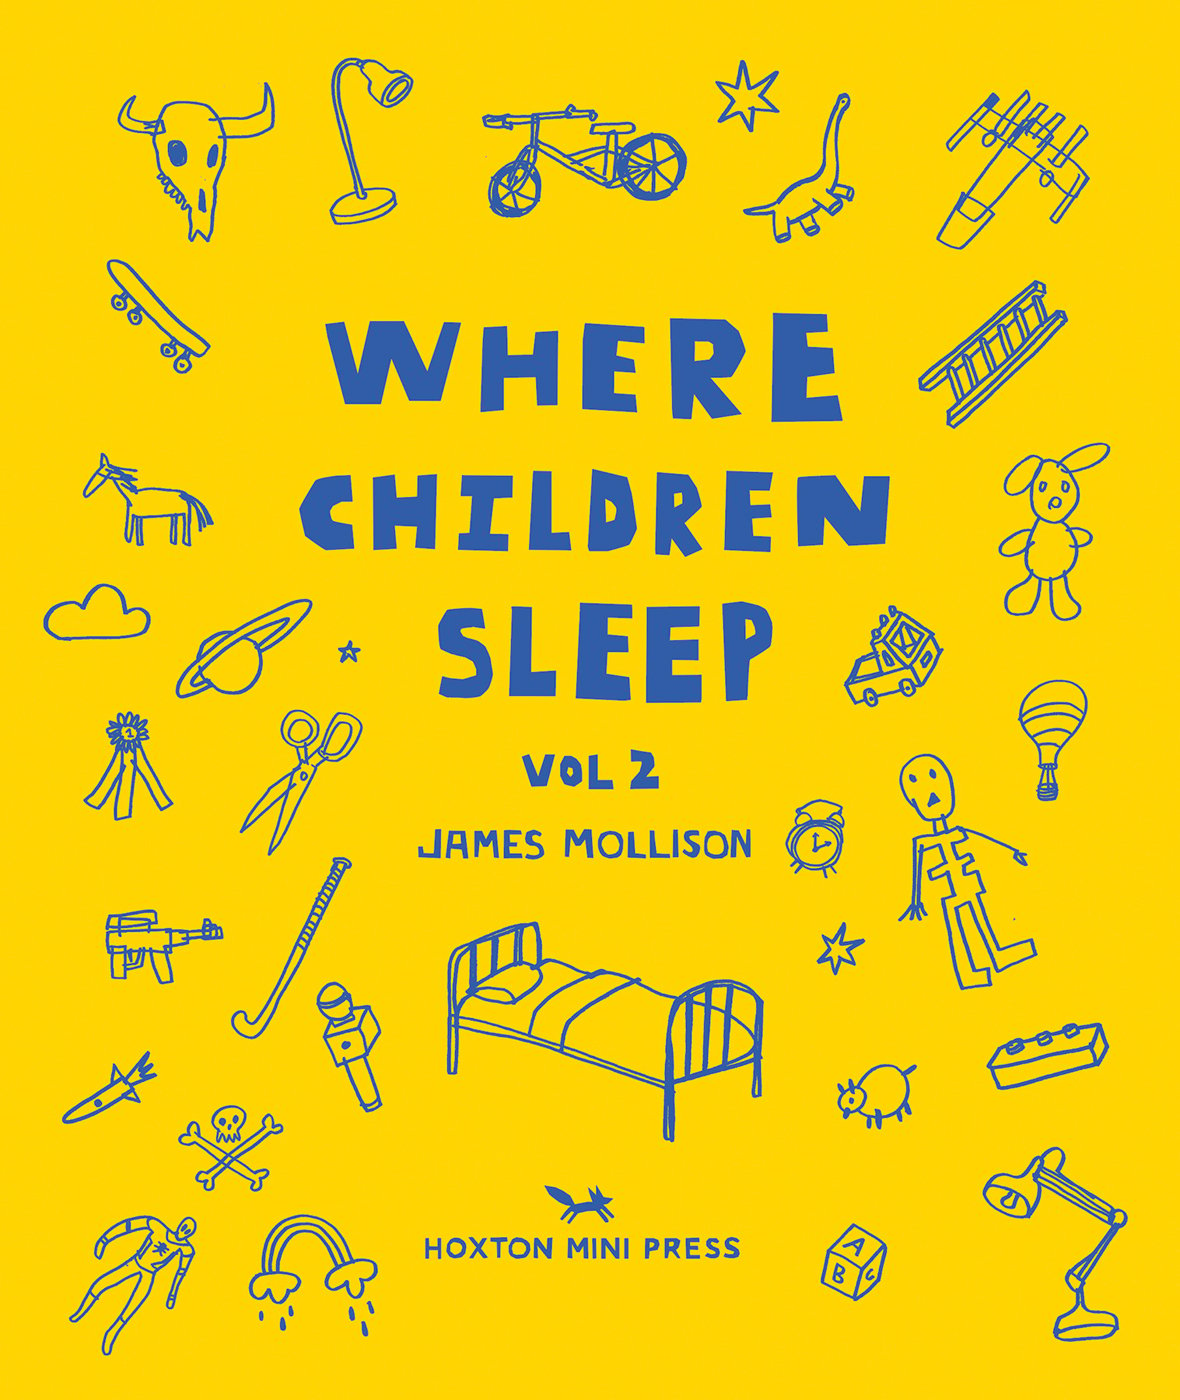 Where Children Sleep Vol. 2 - ACC Art Books US